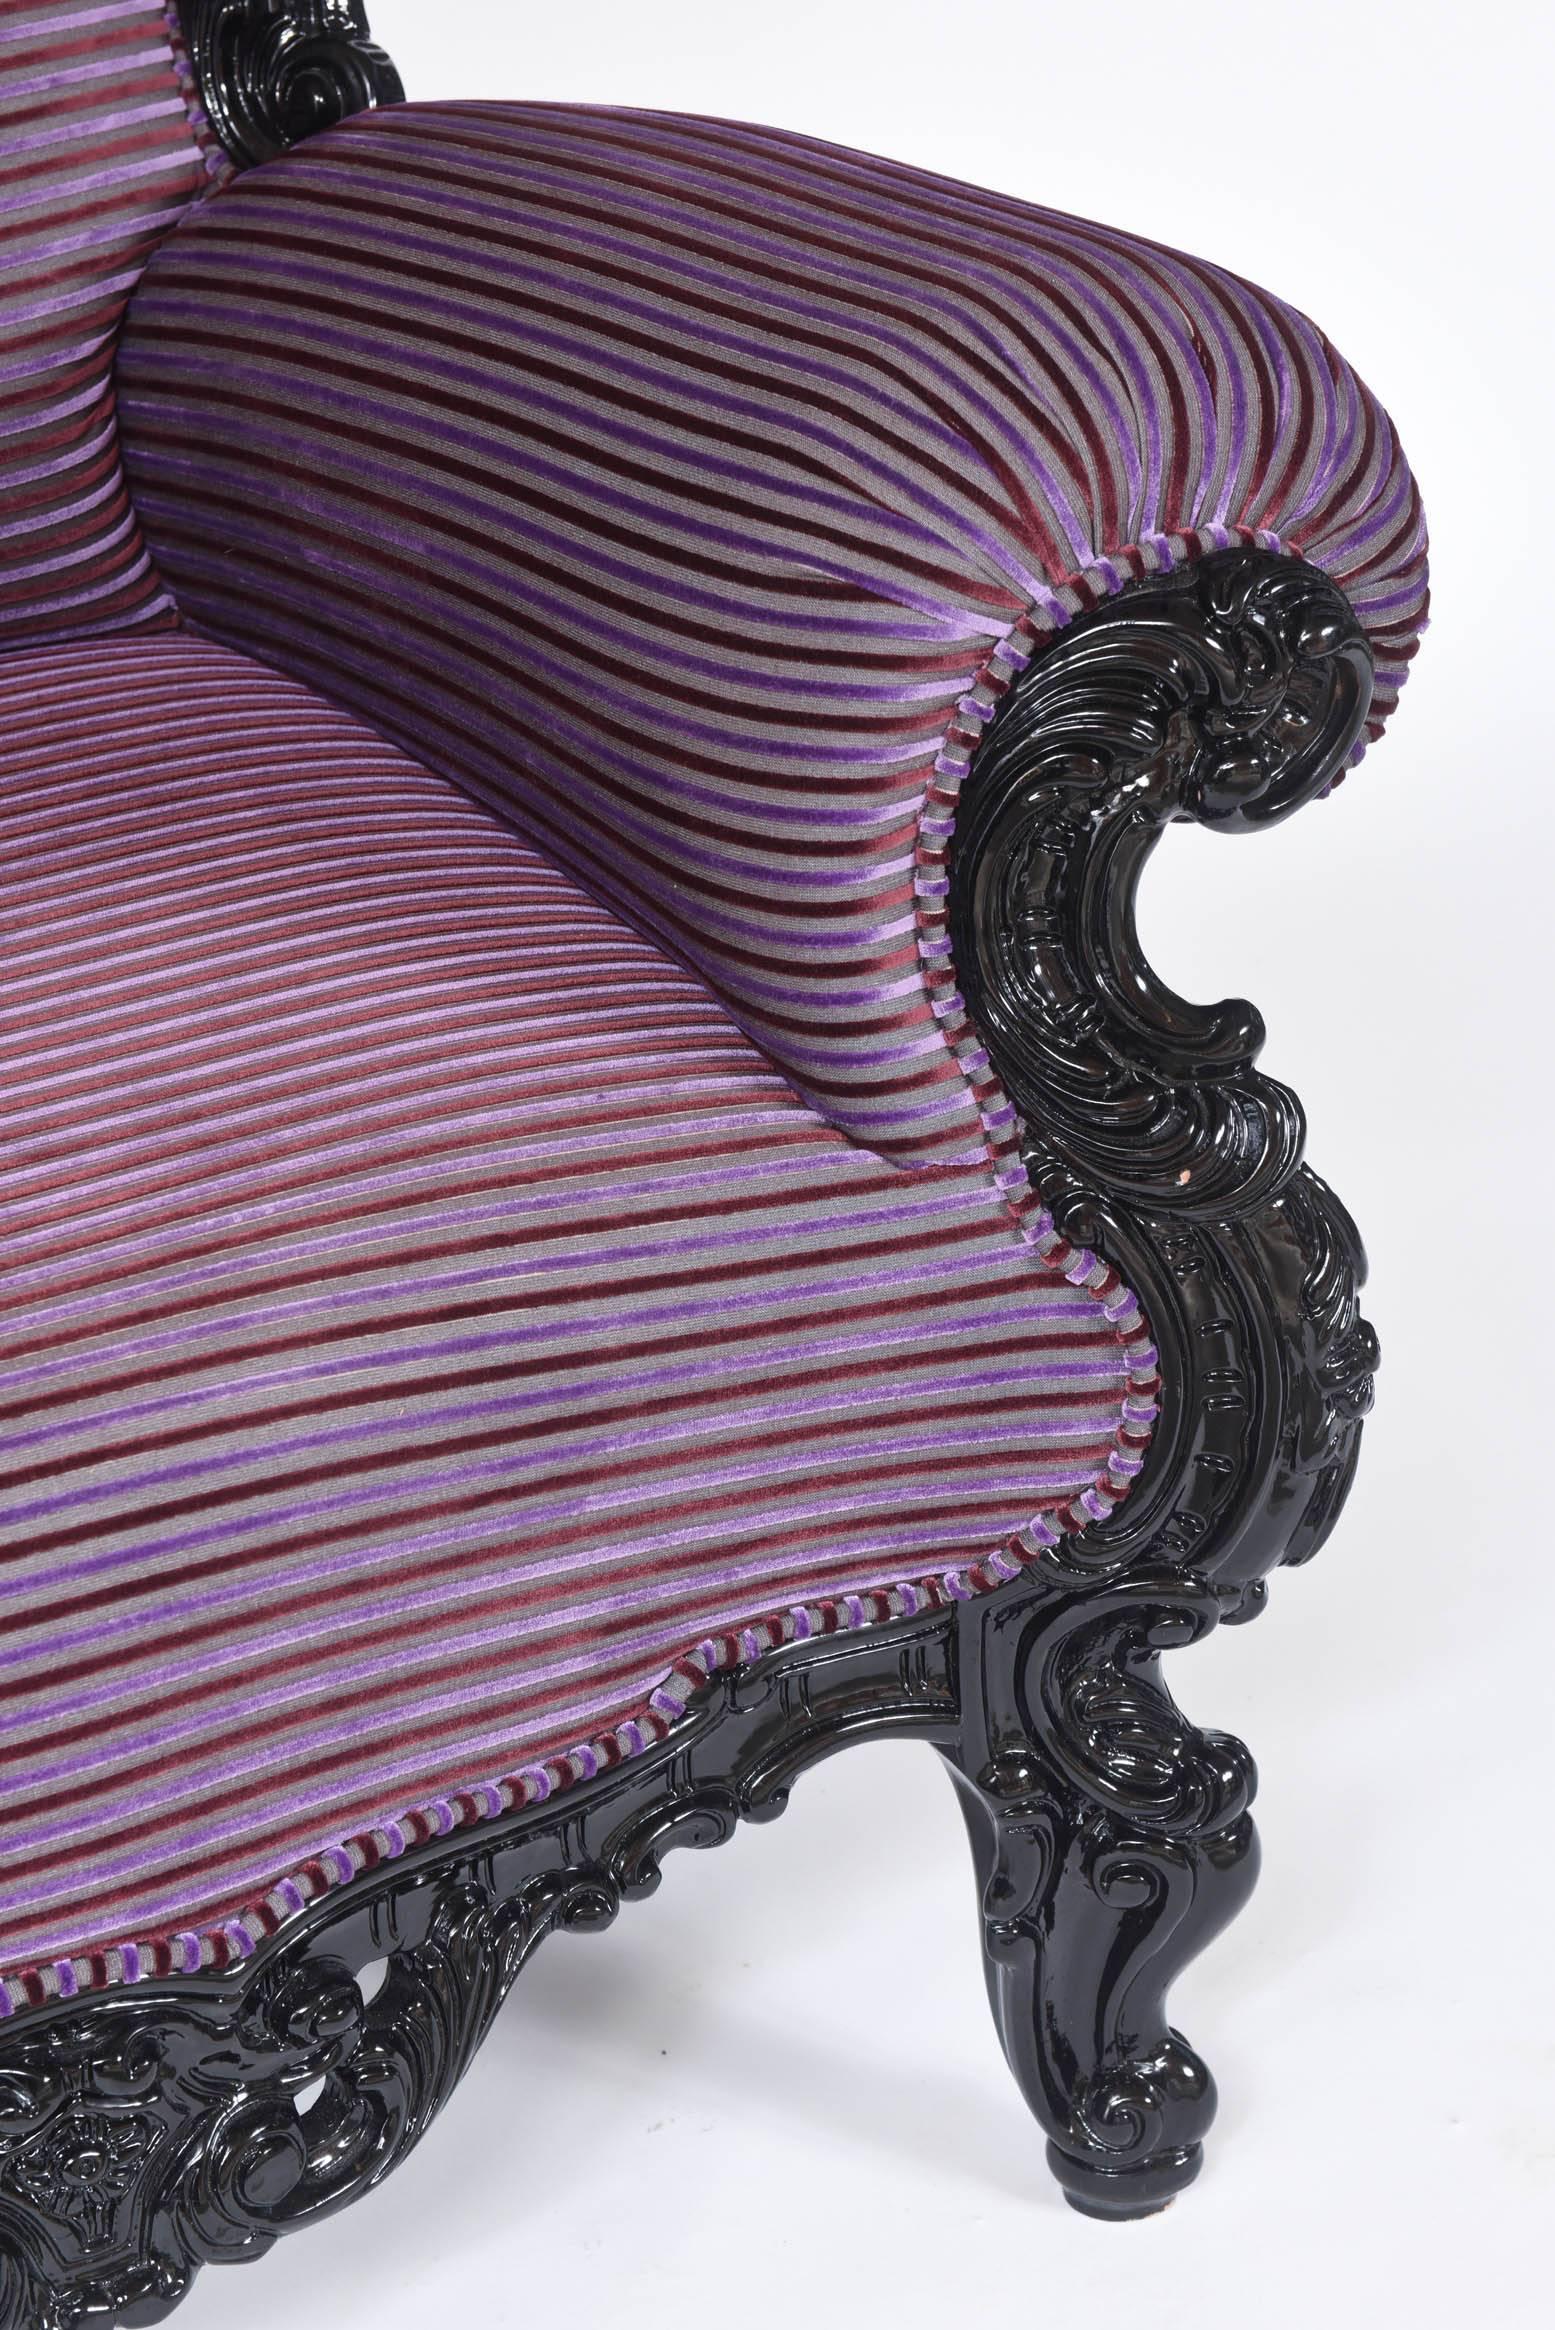 oversized purple chair